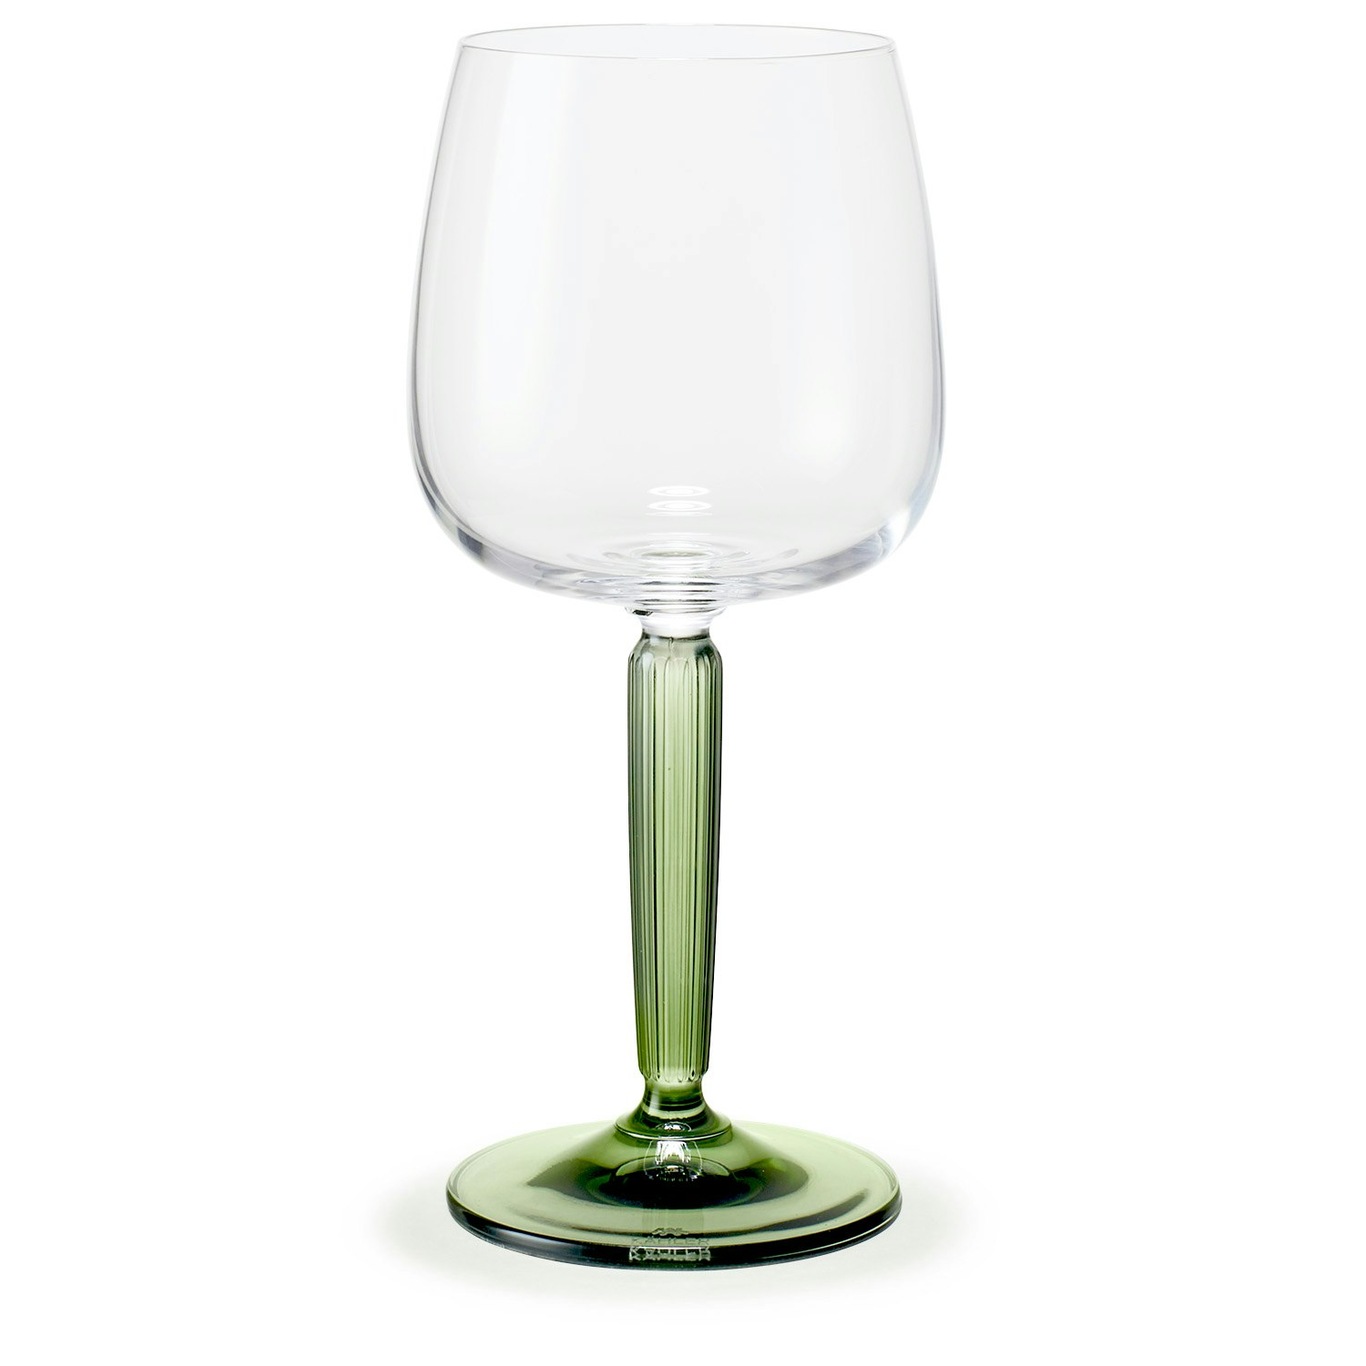 Hammershøi White Wine Glass 35 cl, 2-pack, Green